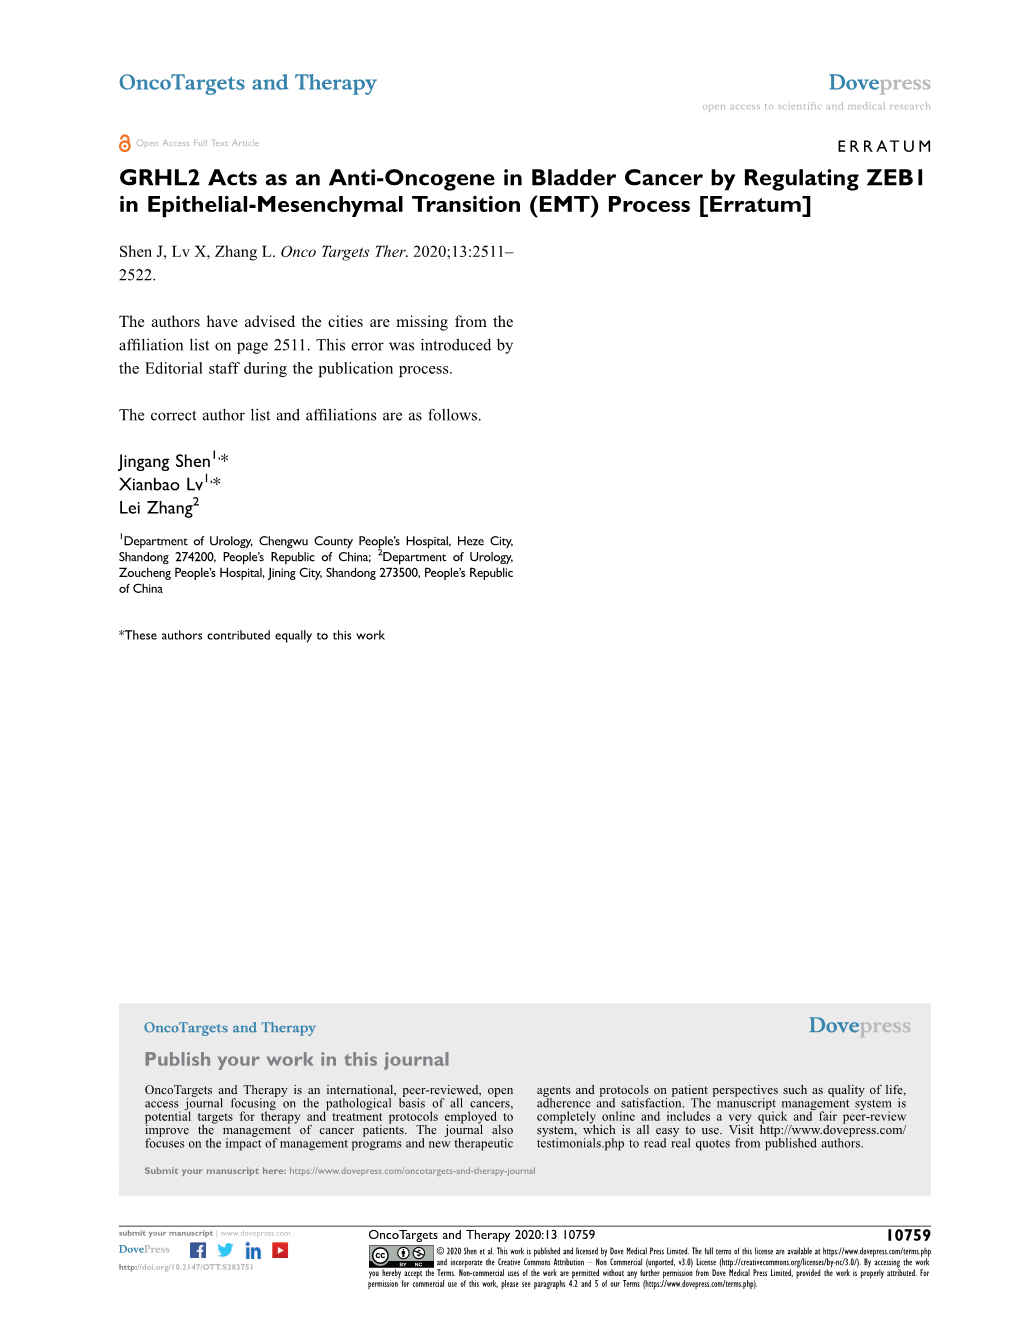 GRHL2 Acts As an Anti-Oncogene in Bladder Cancer by Regulating ZEB1 in Epithelial-Mesenchymal Transition (EMT) Process [Erratum]